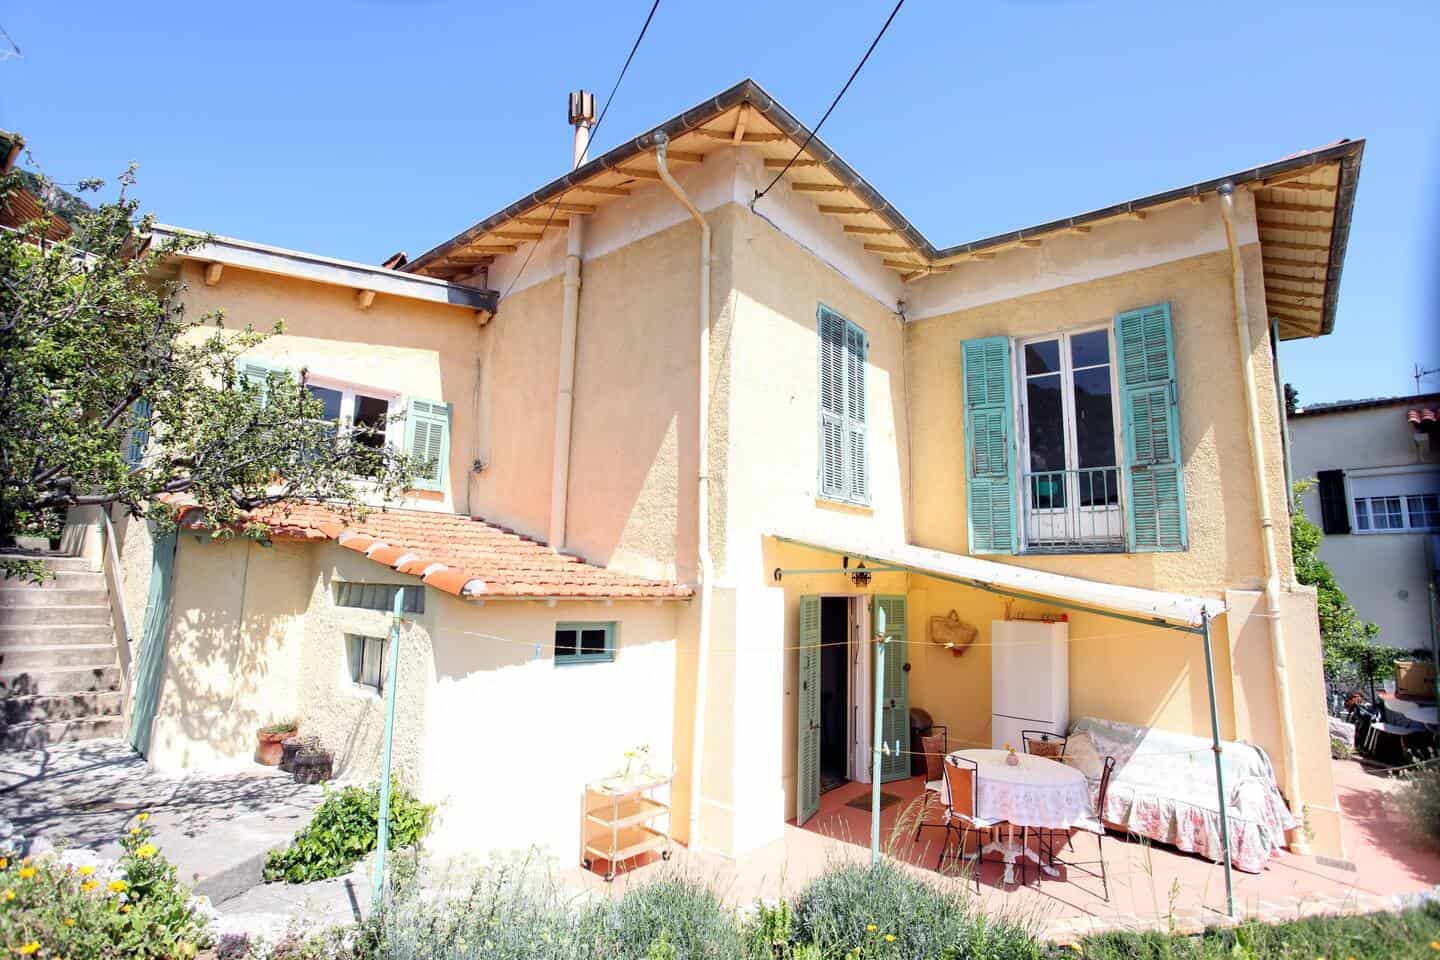 Image of Airbnb rental in Villefranche-sur-Mer, France